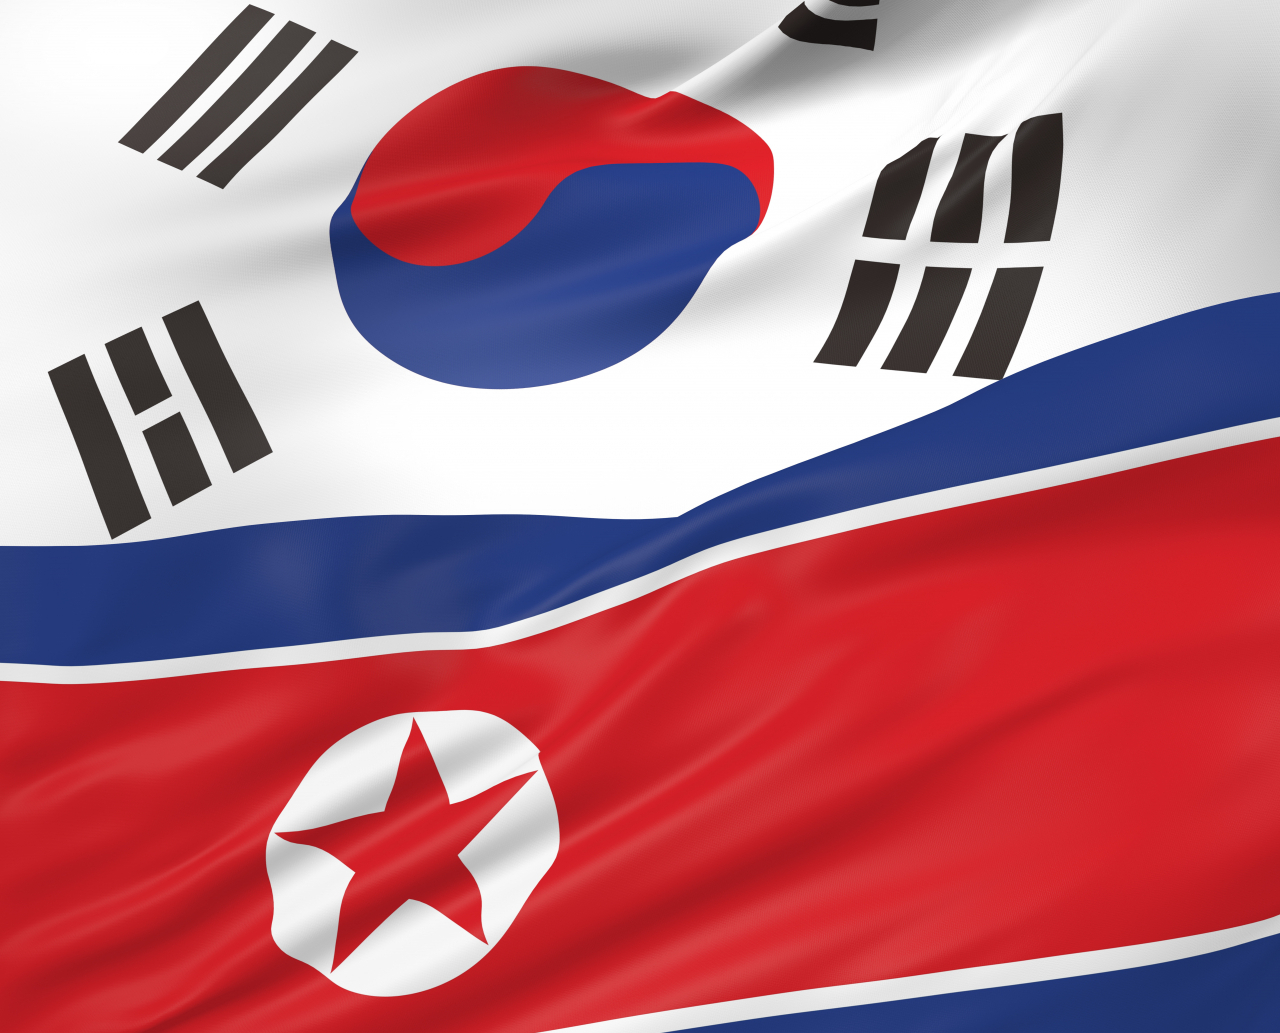 The flags of South Korea and North Korea (123rf)